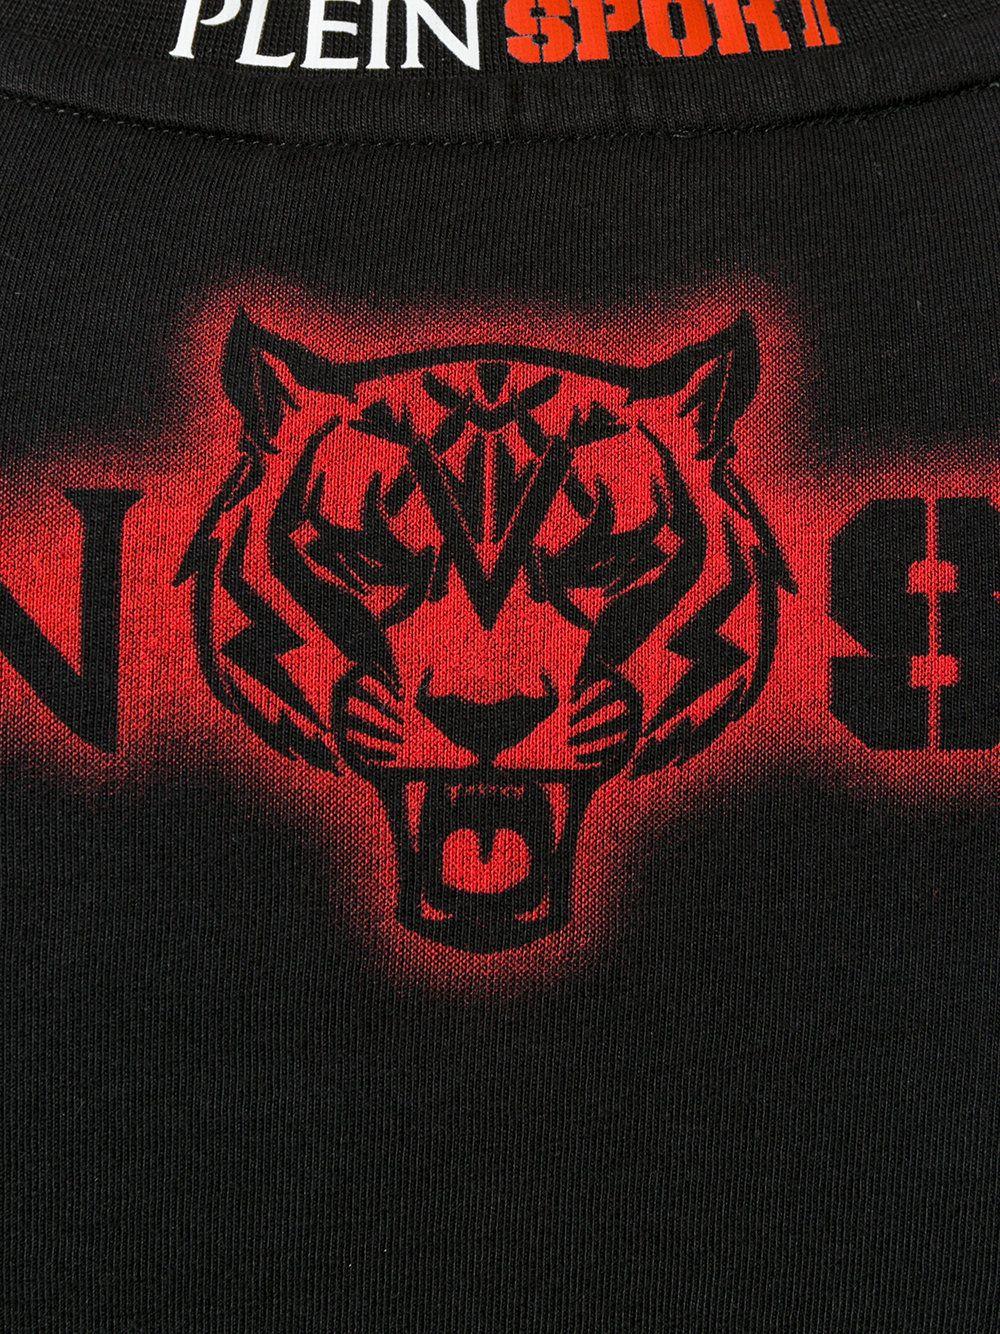 Black and Red T Logo - Plein Sport logo motif T-shirt Designer colour:0213 BLACK RED ...